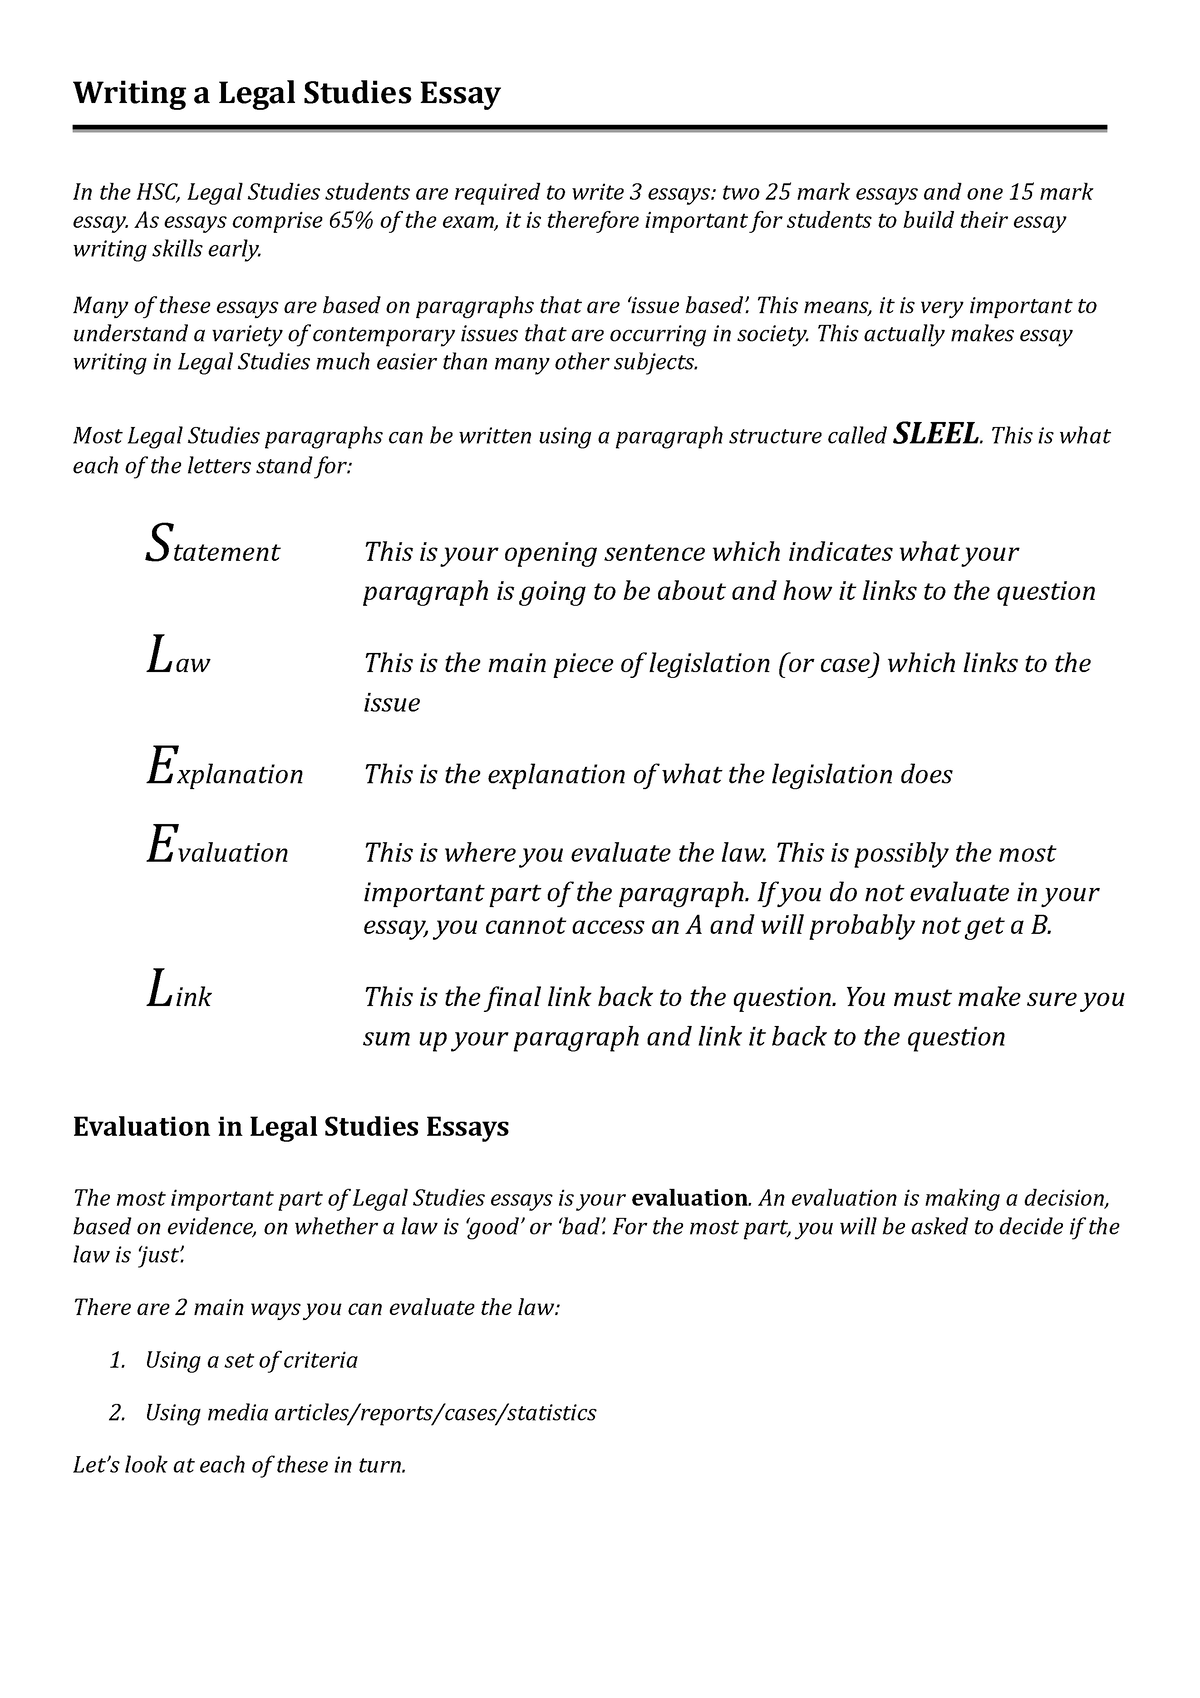 write an essay on legal